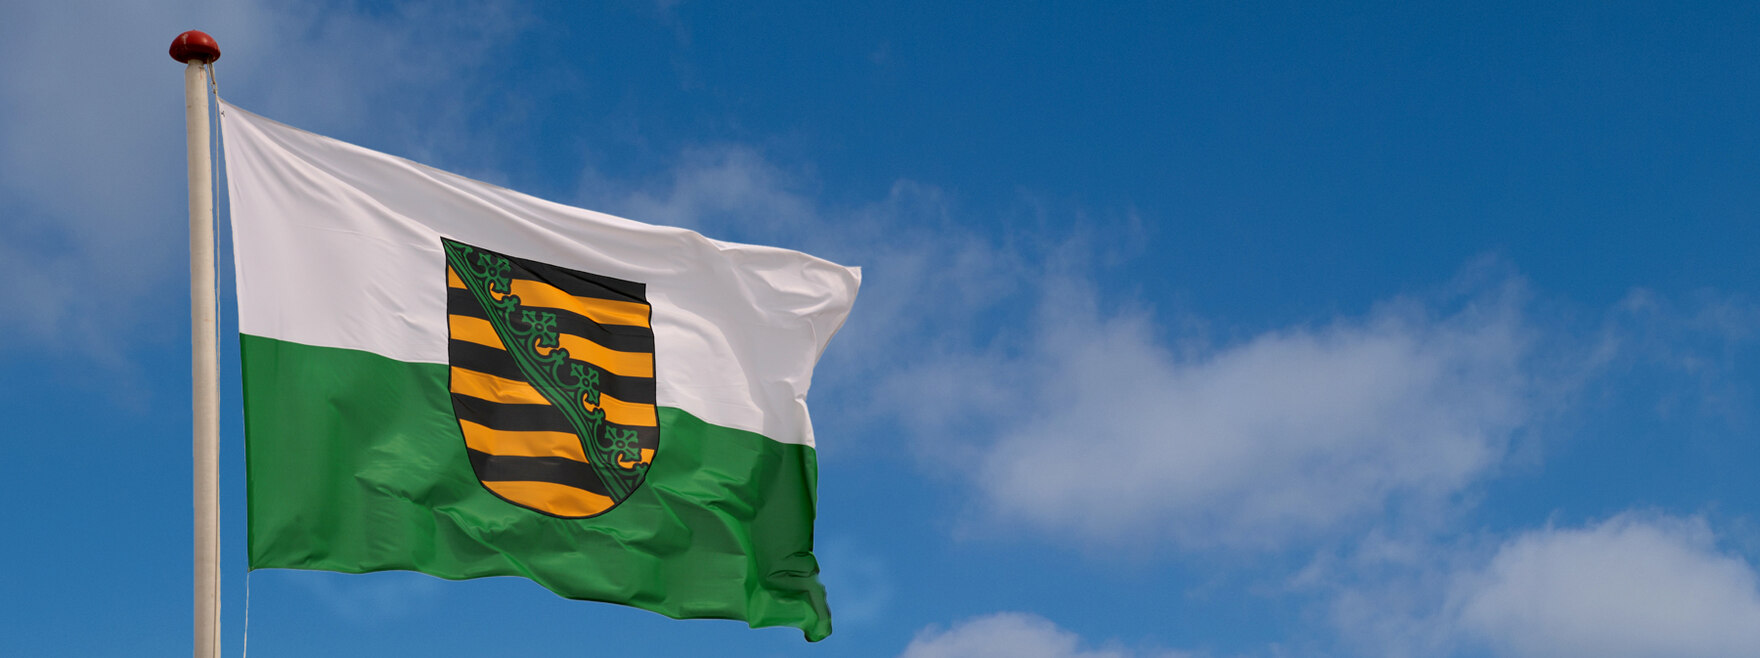 Flagge Freistaat Sachsen